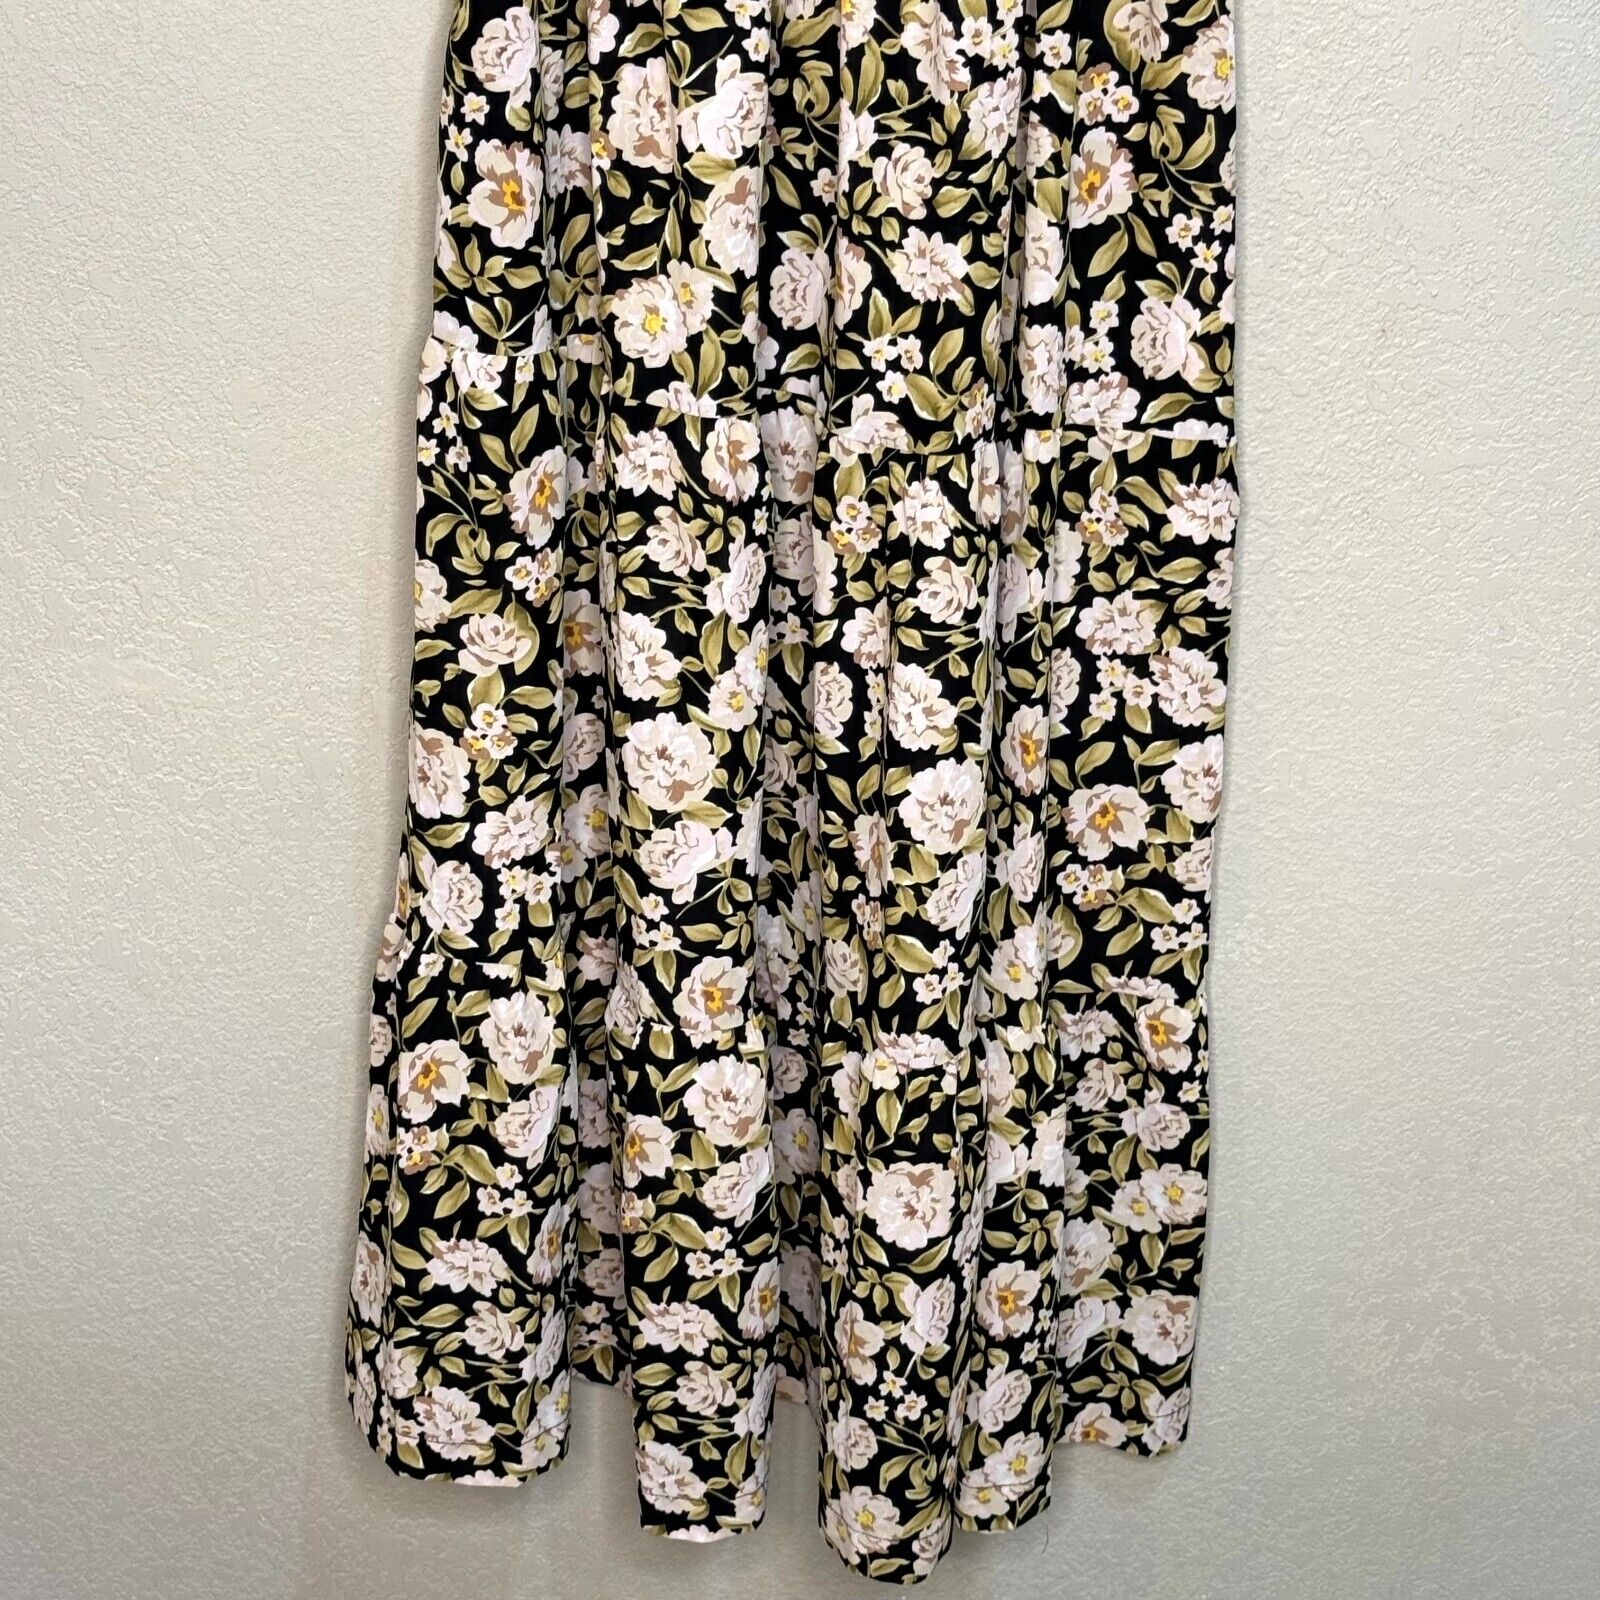 En Saison Kinsley Black Floral One Shoulder Dress Size XS NEW $108